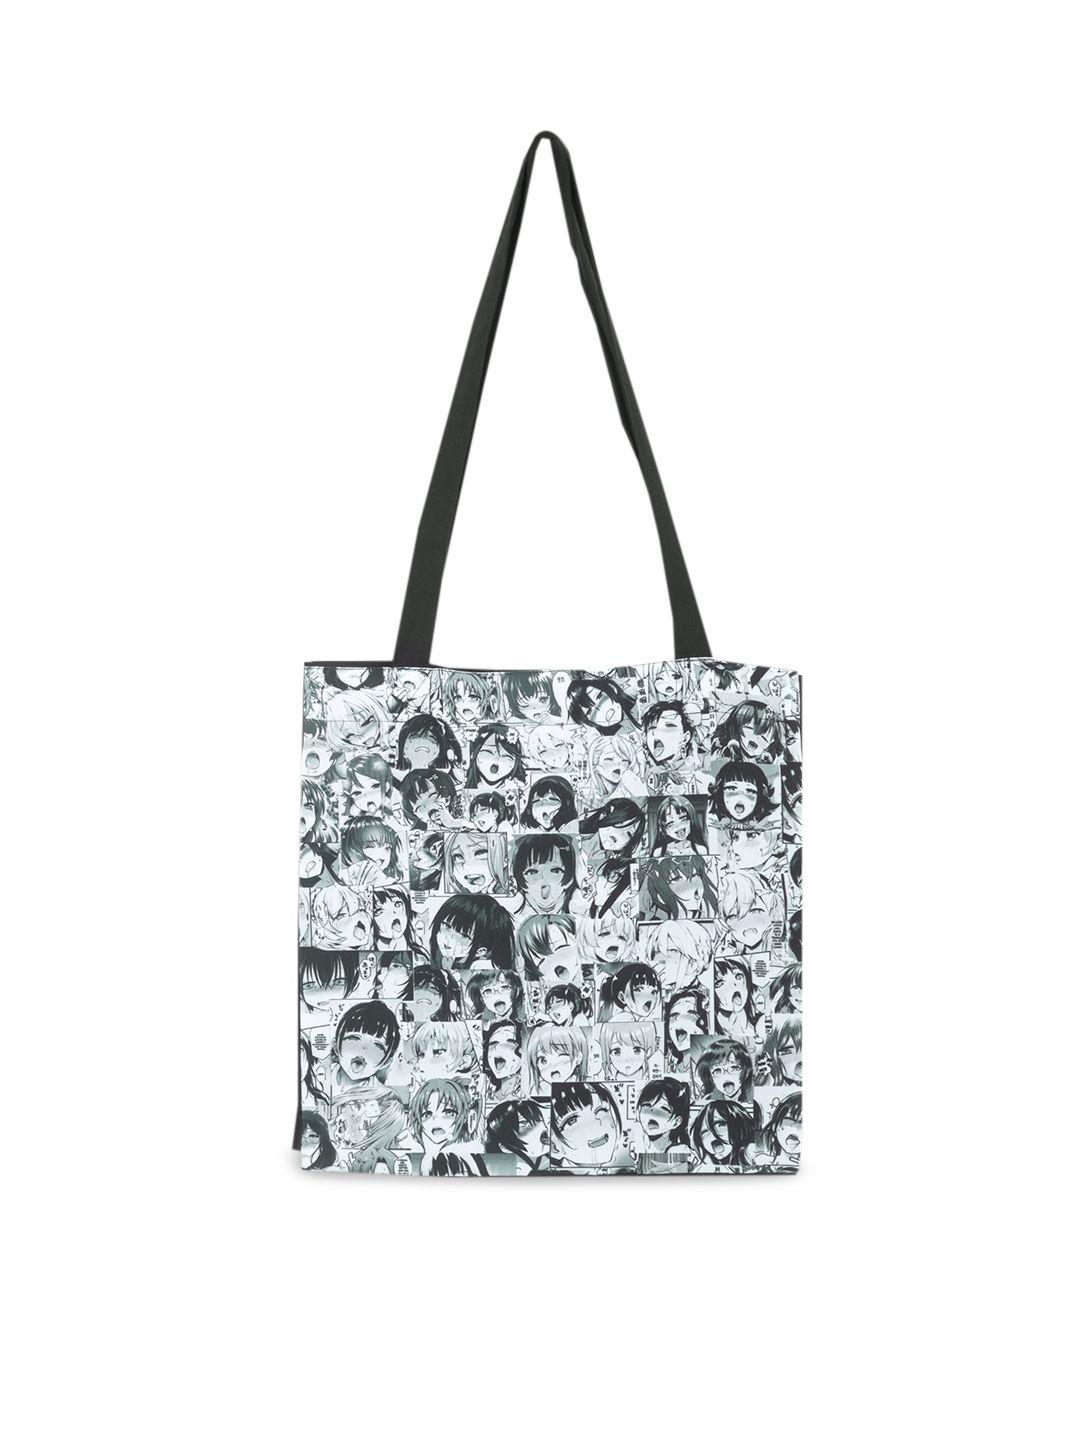 comicsense-ahegao-printed-shopper-tote-bag